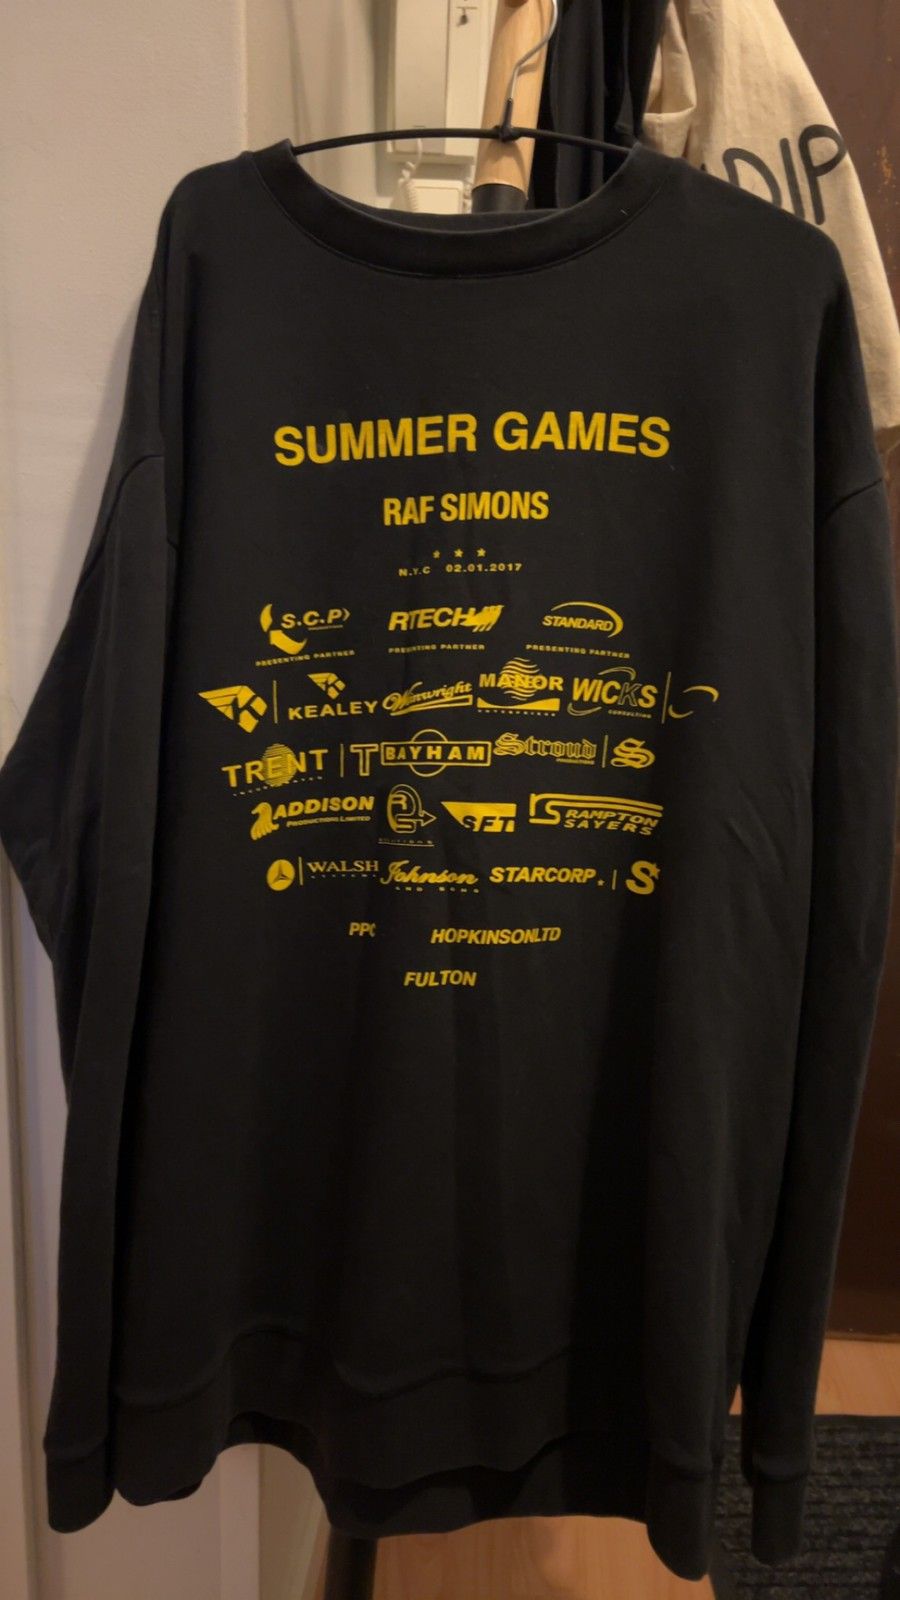 Raf simons summer games